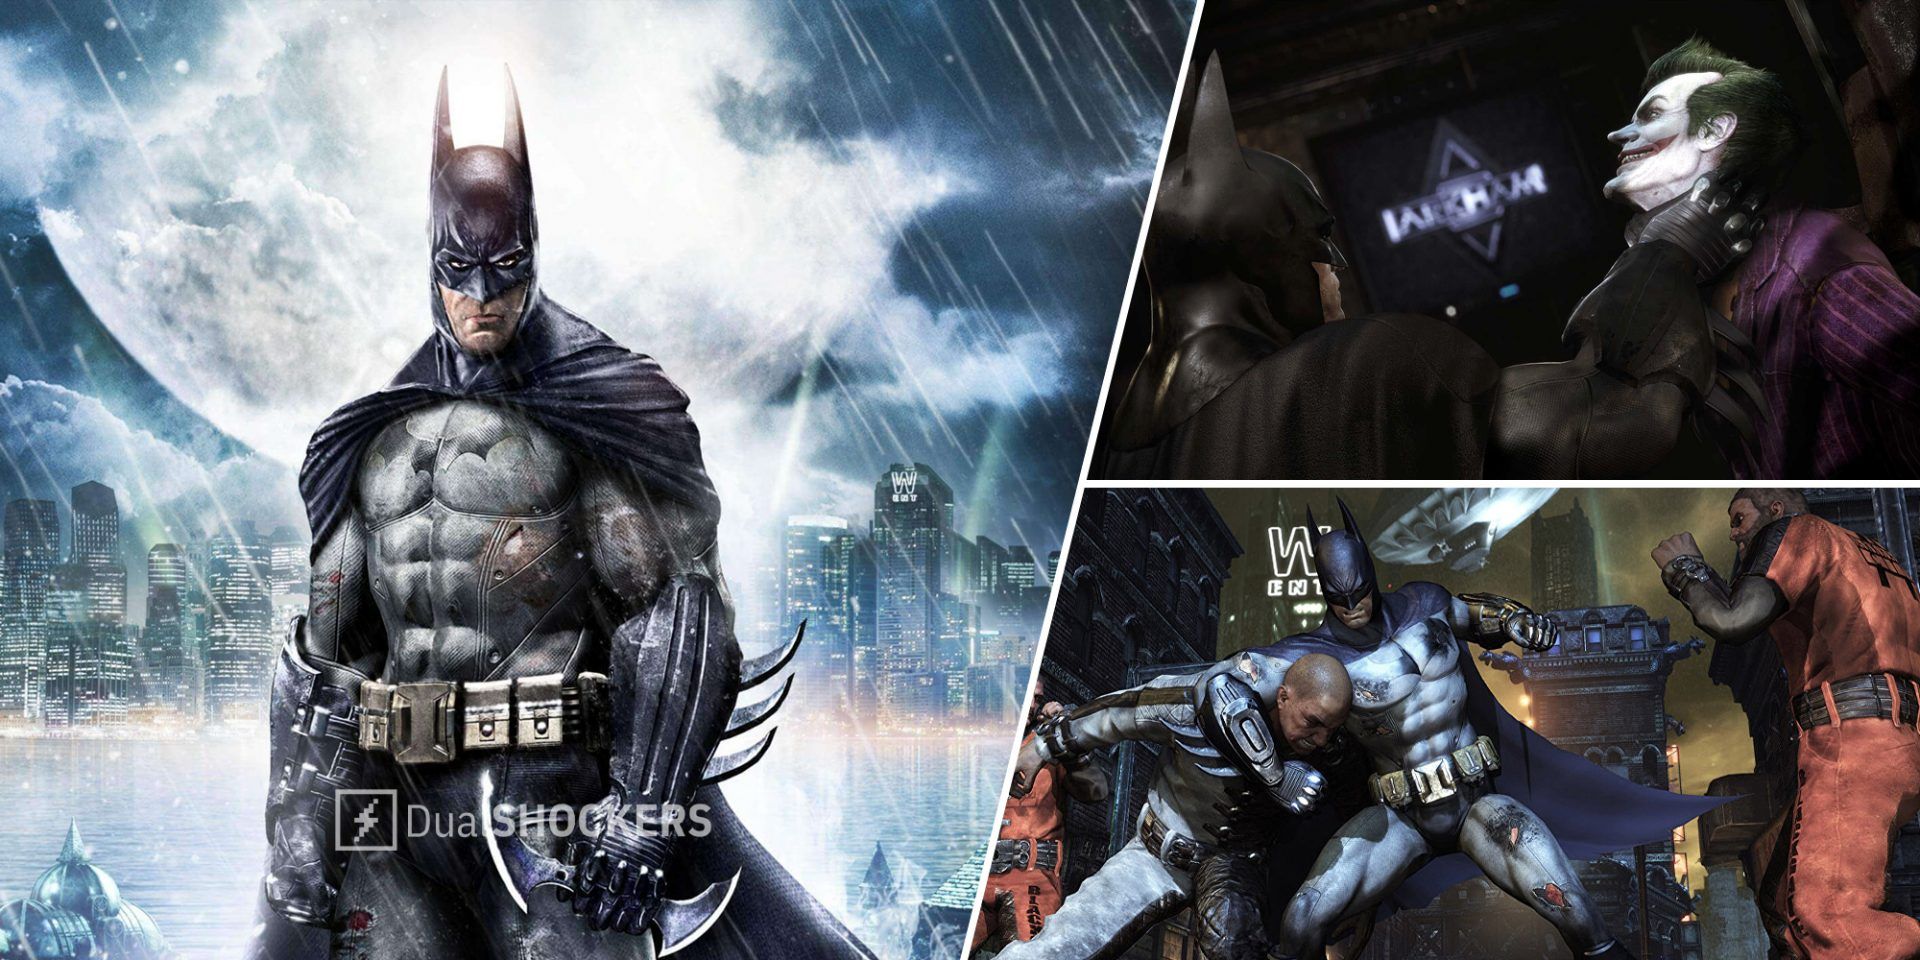 Batman Arkham Asylum on left, Batman choking Joker on top right, Batman fighting enemies on bottom right